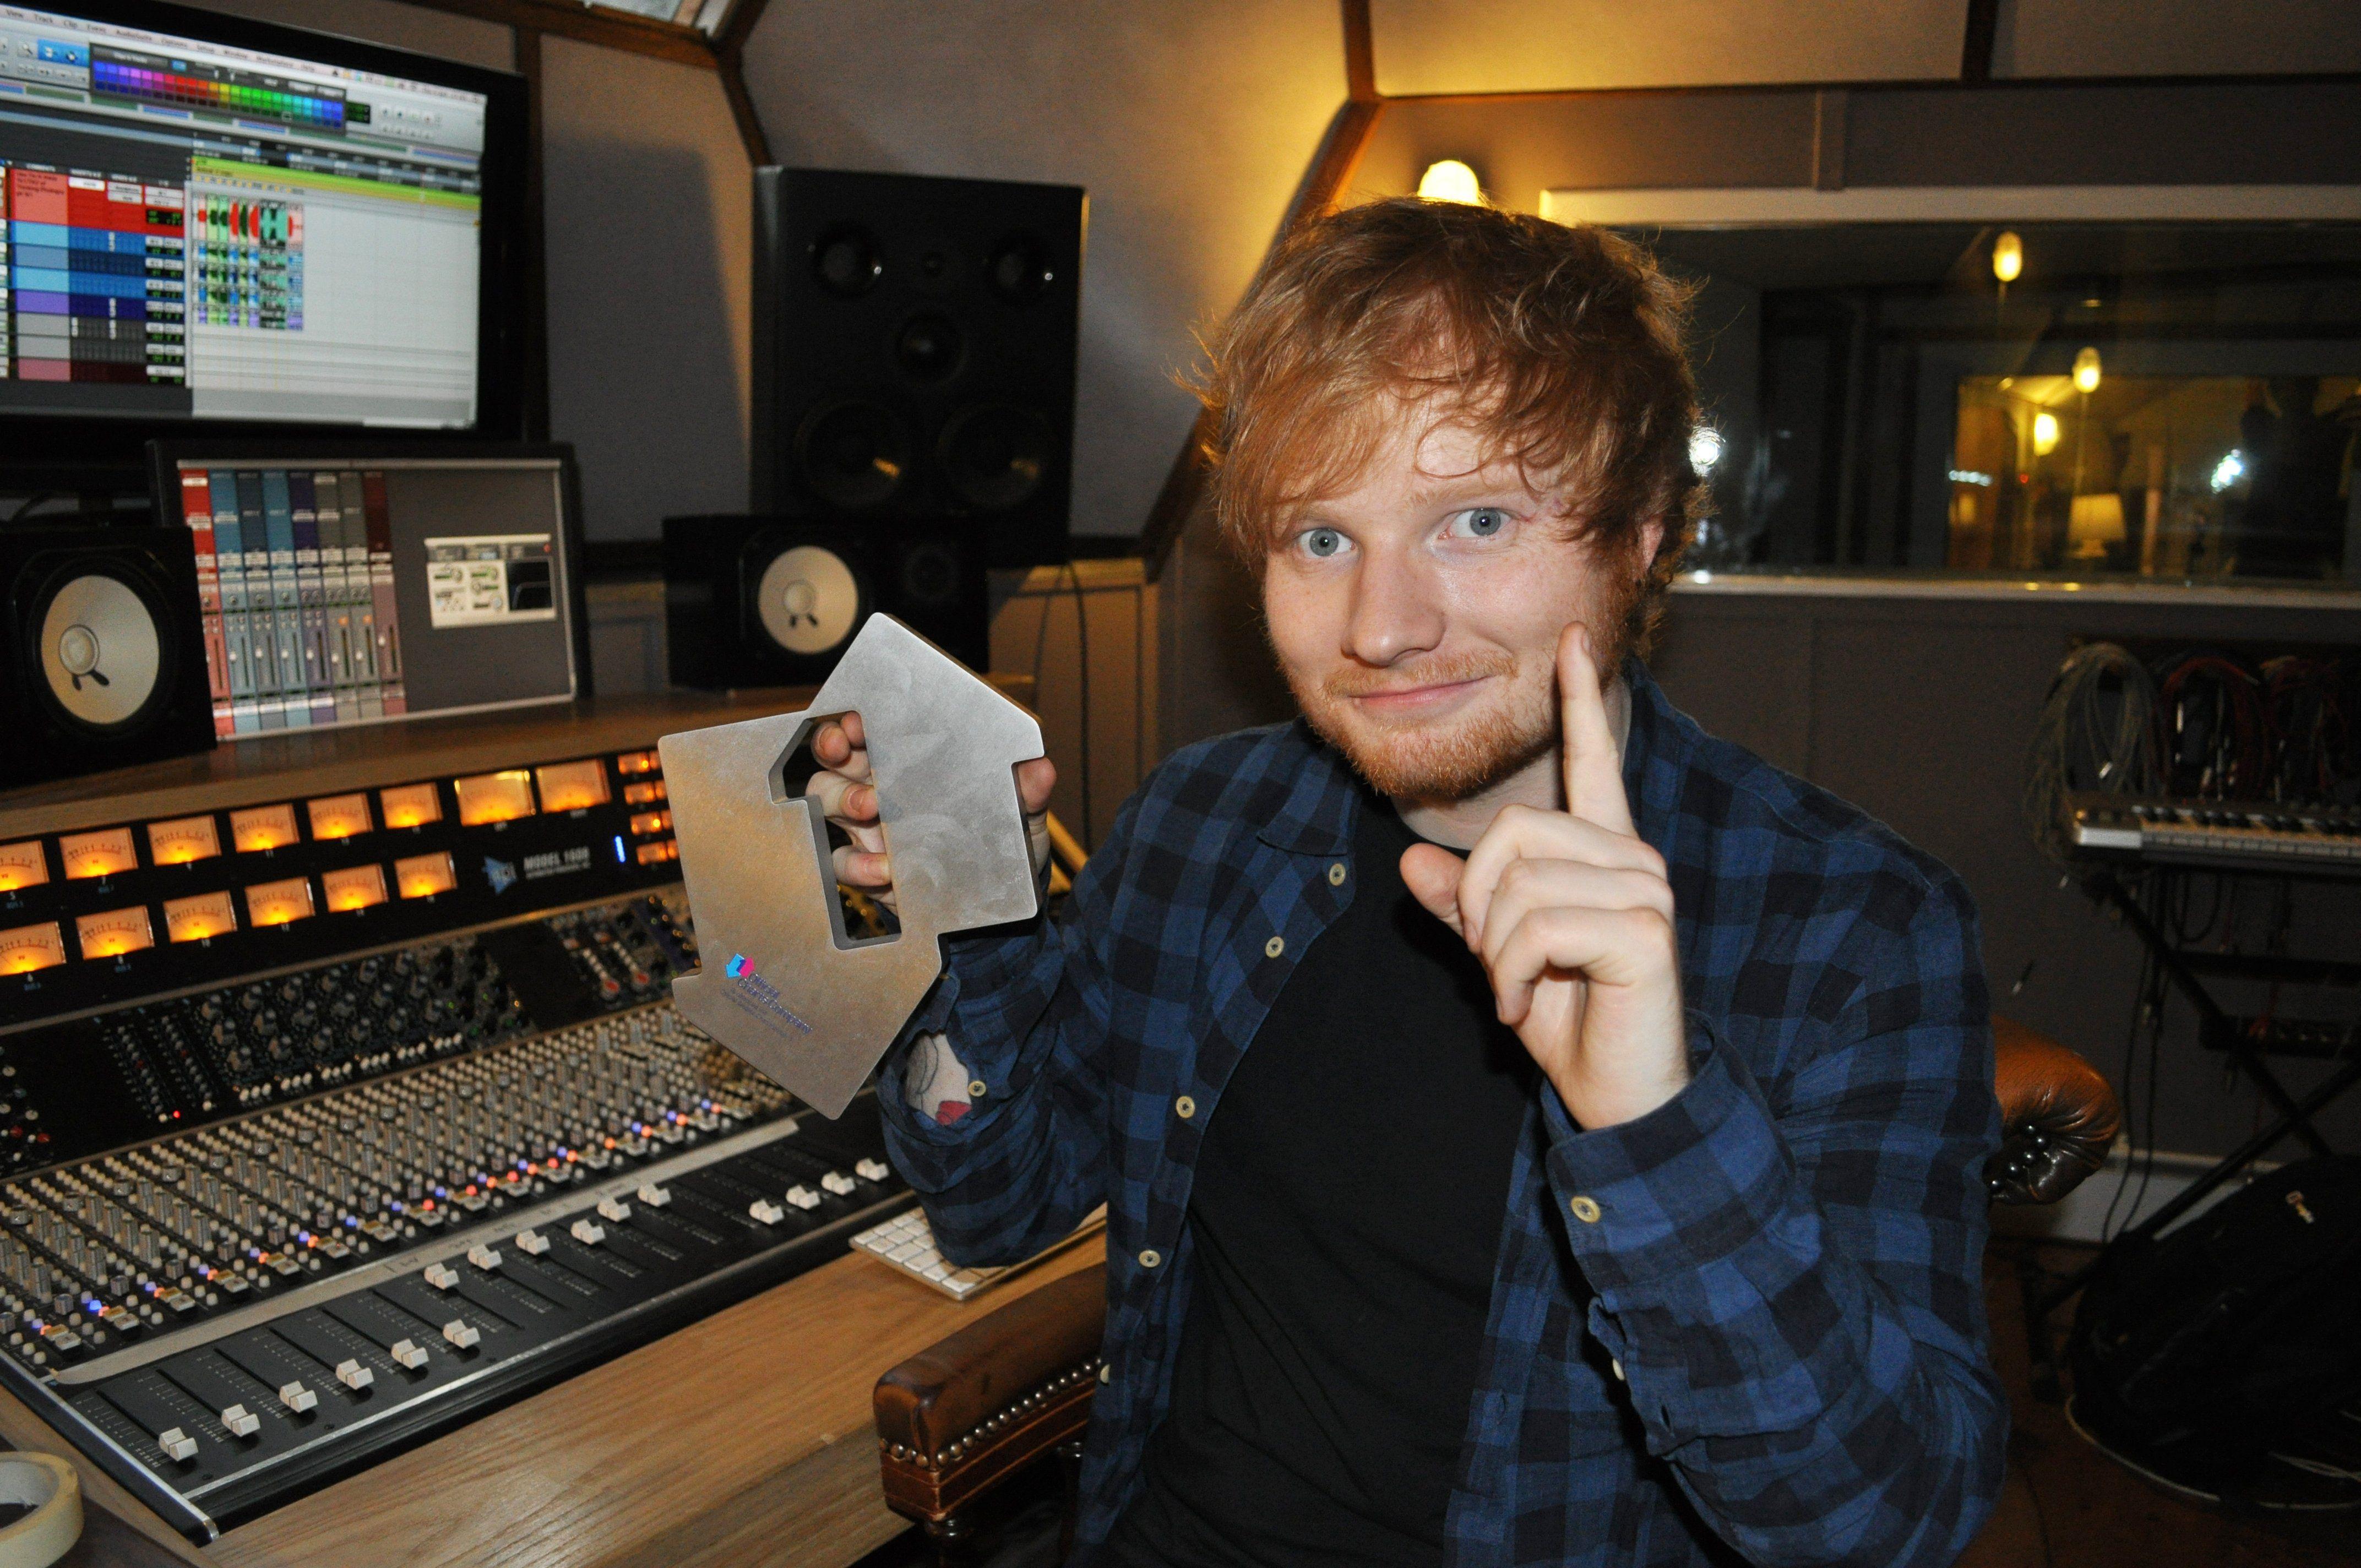 Ed Sheeran Celebrity HD Wallpapers 57047 4288x2848 px